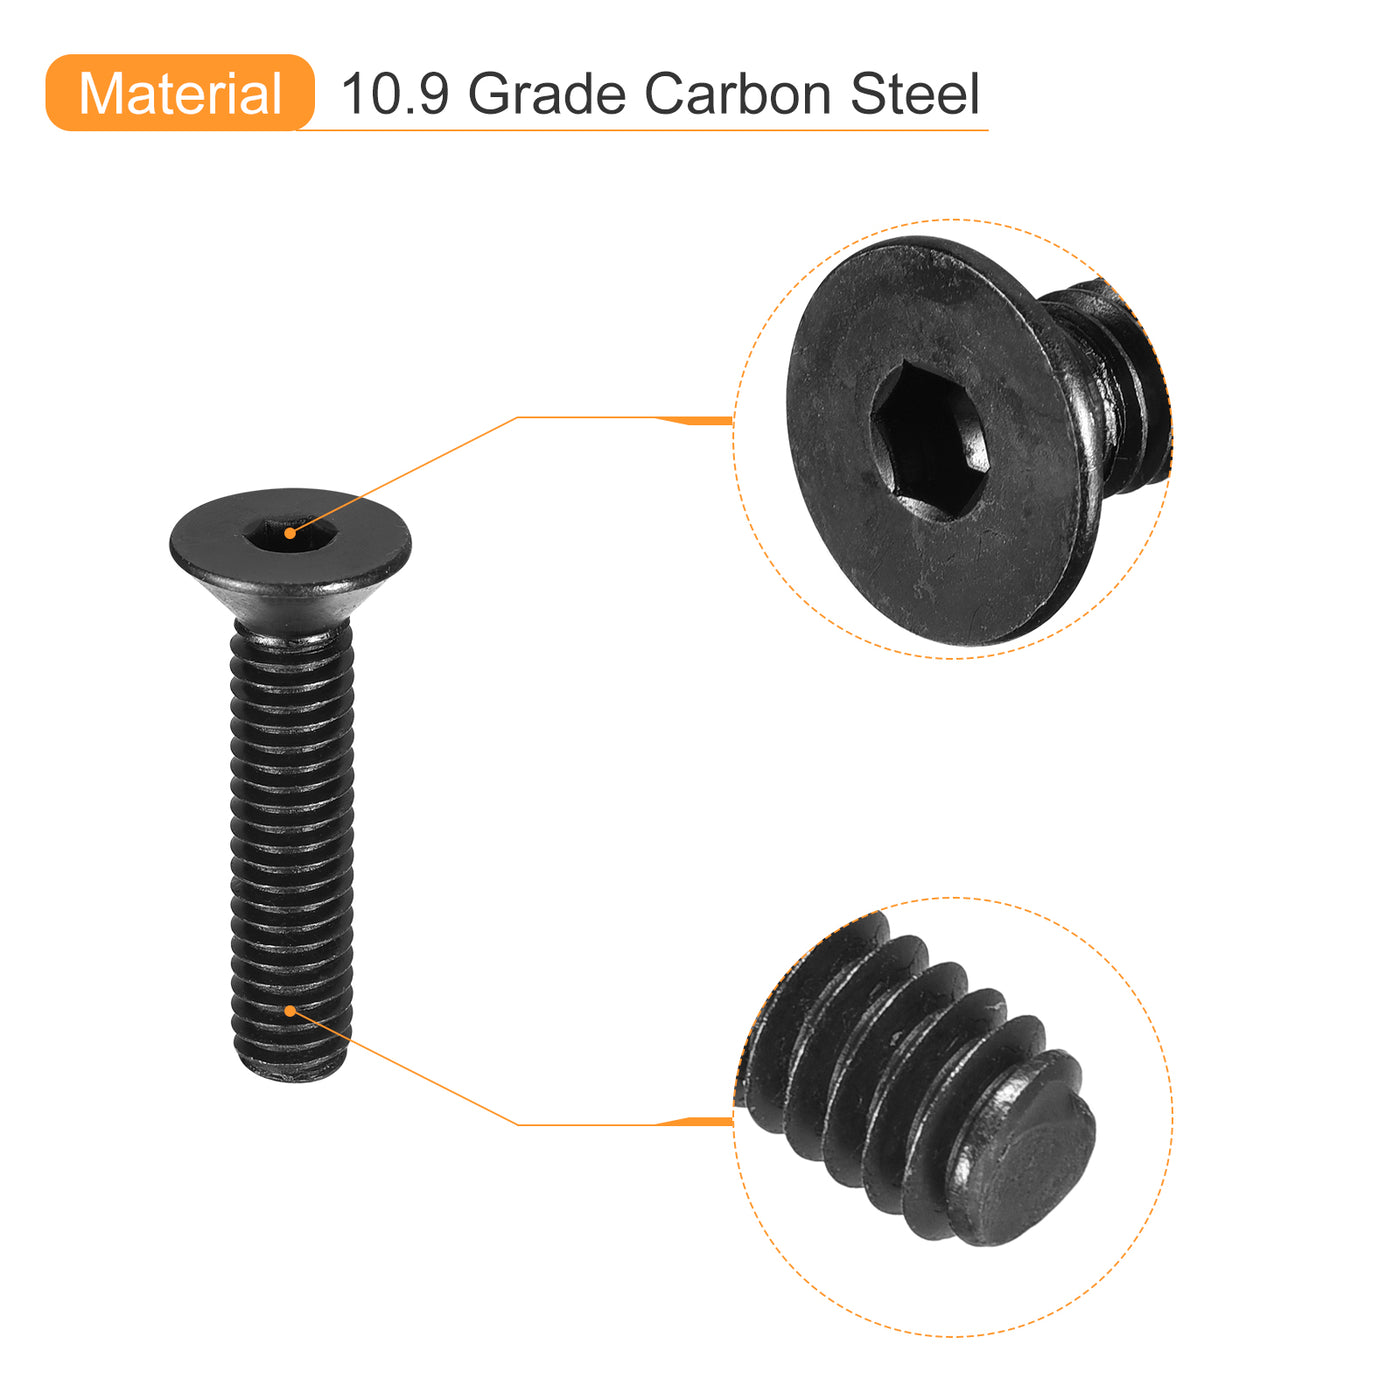 uxcell Uxcell 5/16-18x1-1/2" Flat Head Socket Cap Screws, 10.9 Grade Carbon Steel, 20PCS